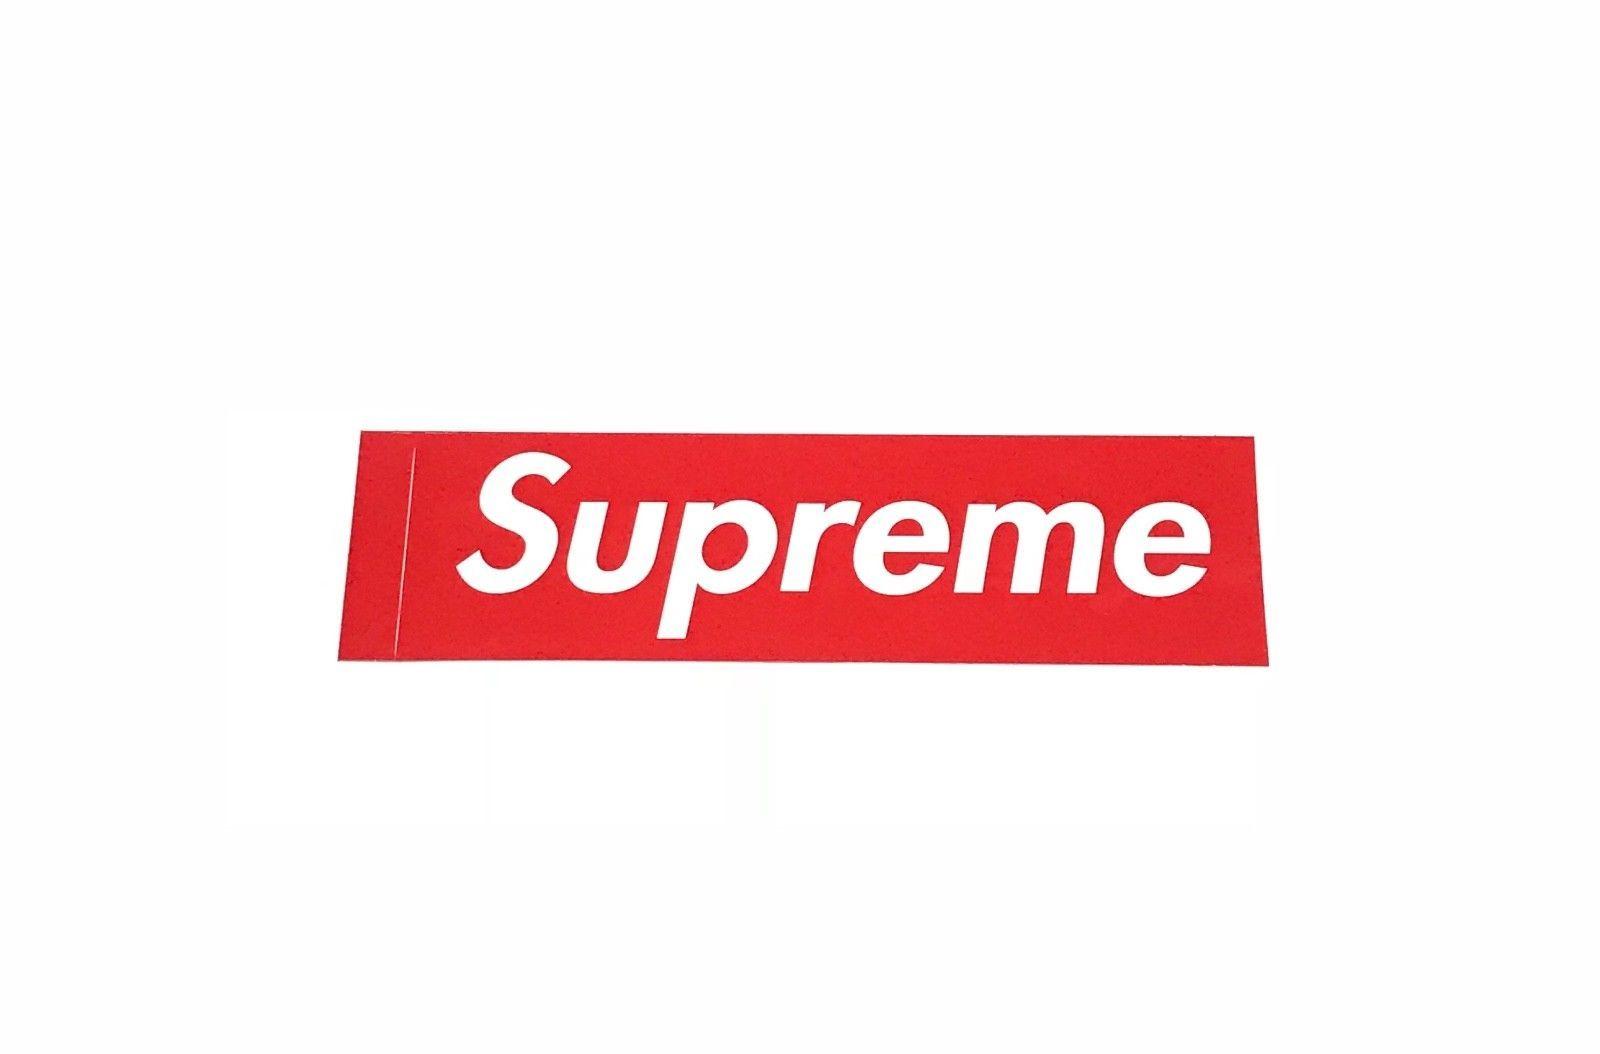 BAPE Supreme Box Logo - Details about Supreme Box Logo Sticker Classic Red 100% Authentic